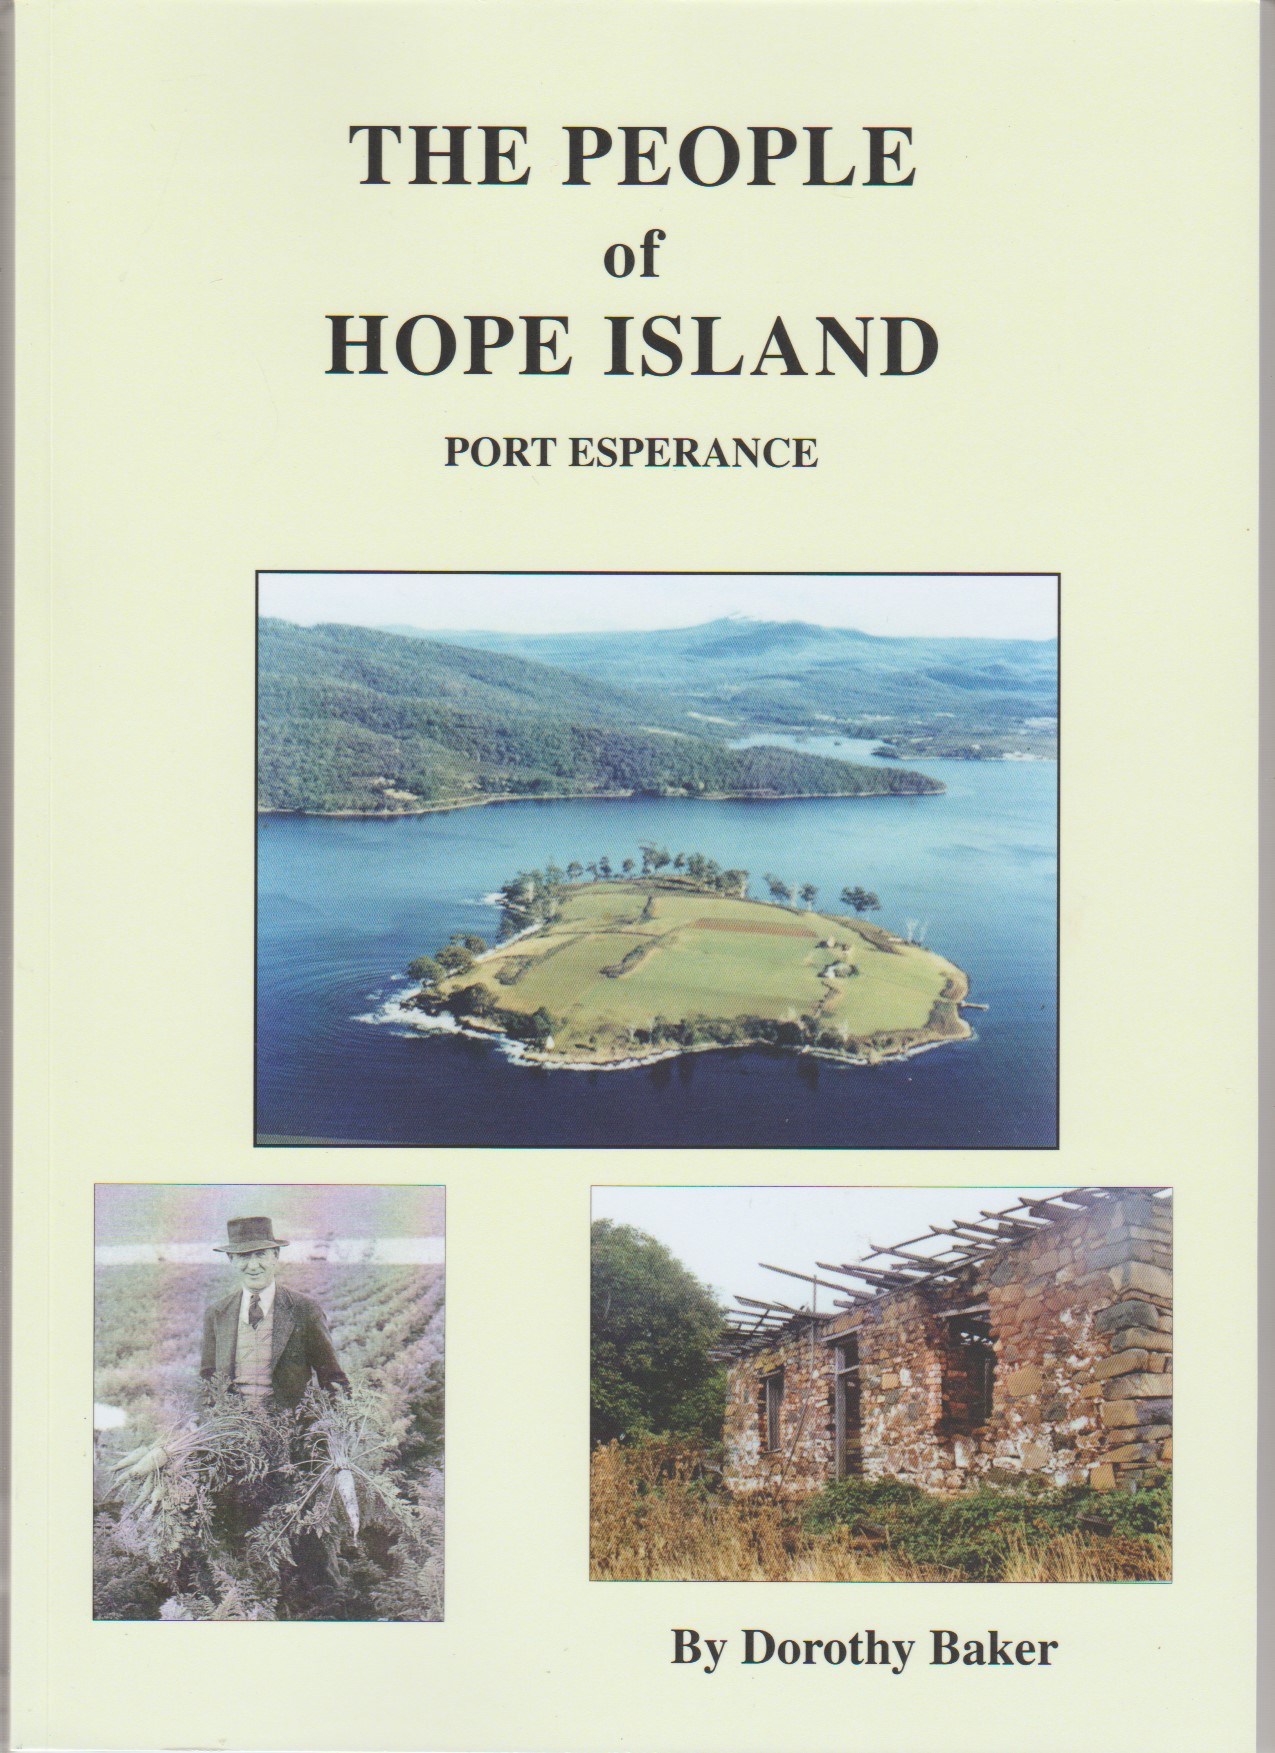 The People of Hope Island, Port Esperance